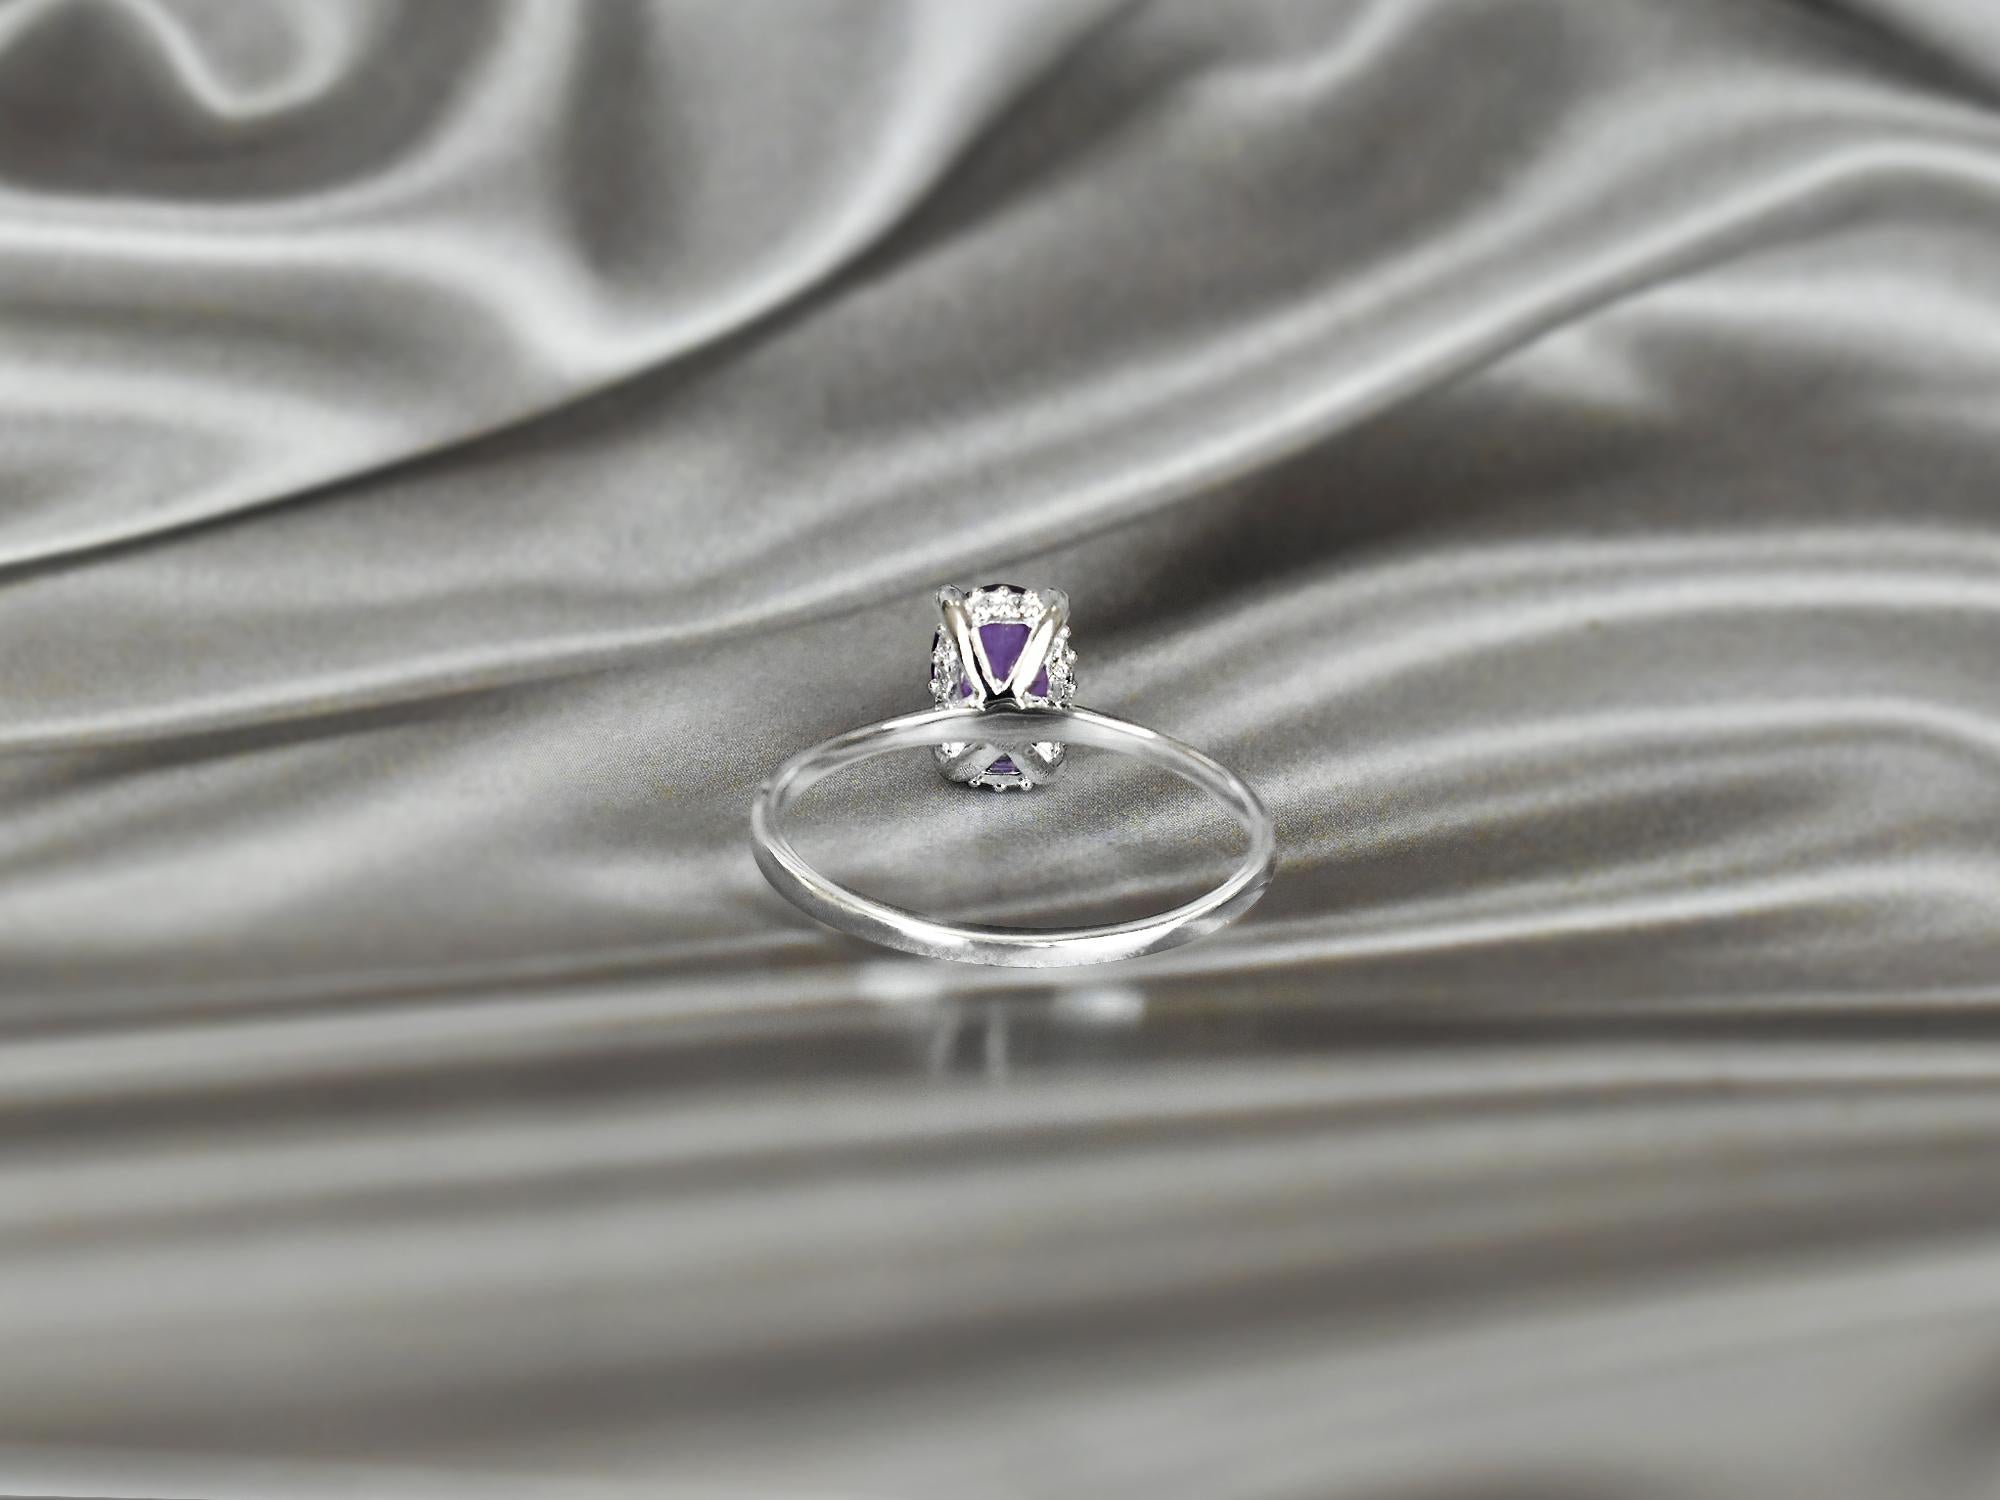 For Sale:  14k Gold Oval Gemstone 8x6 mm Oval Cut Gemstone Ring Gemstone Engagement Ring 11